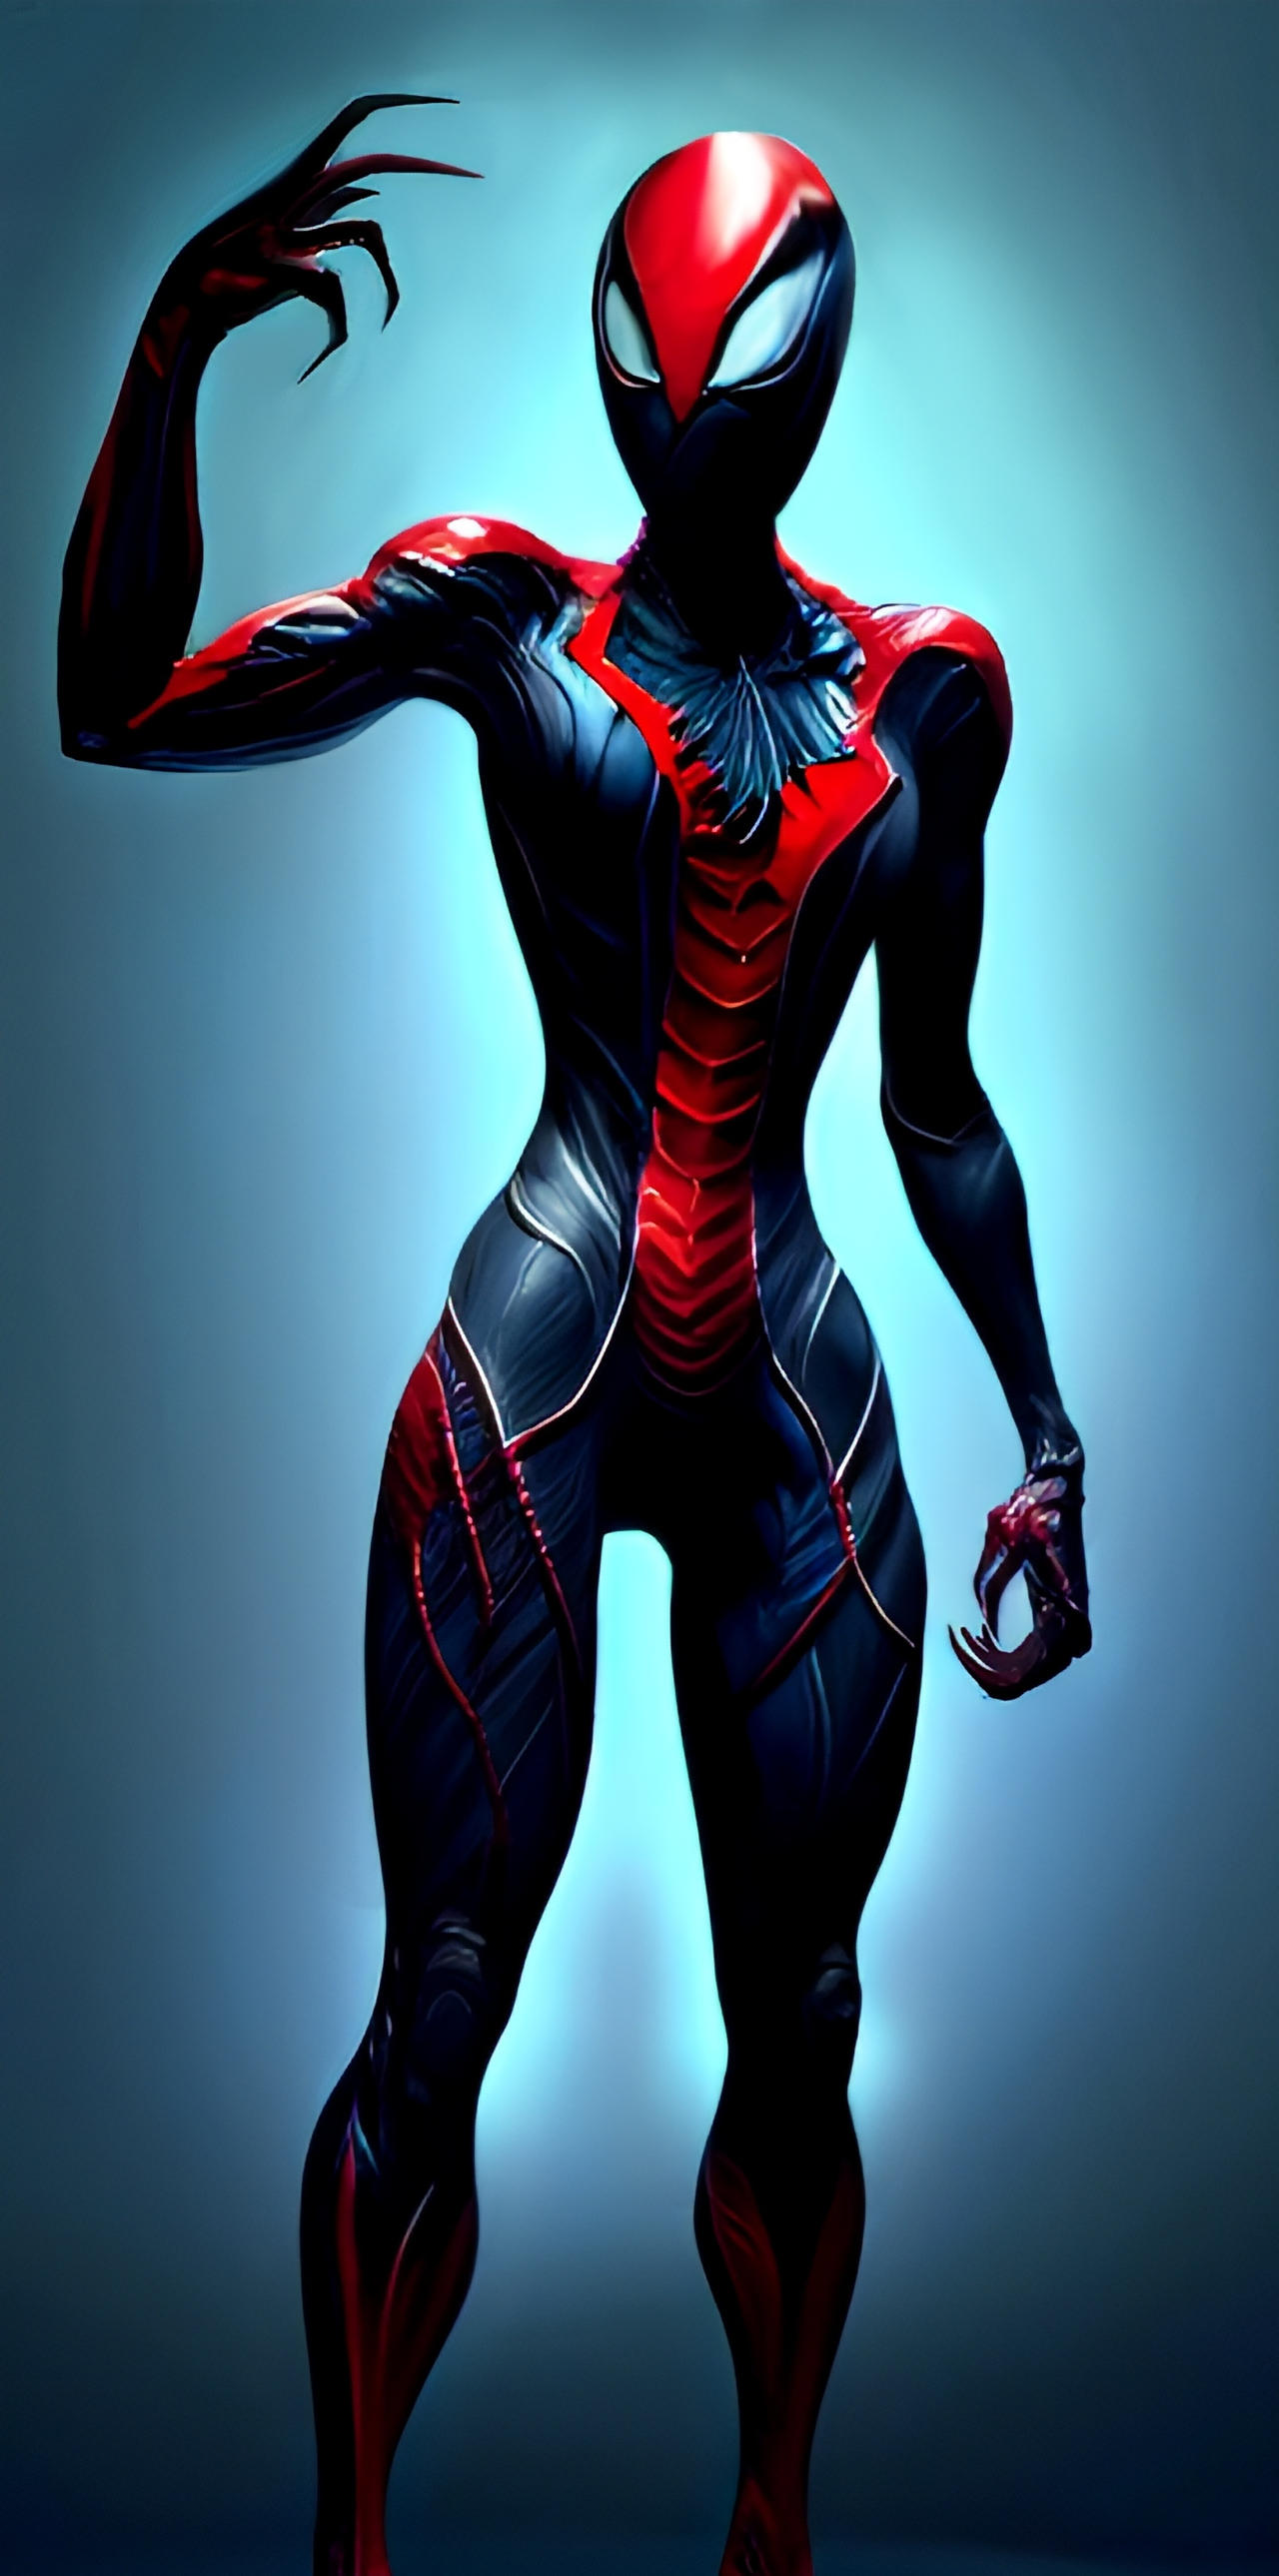 Symbiote Female Suit Concept Art by MarceloSilvaArt on DeviantArt